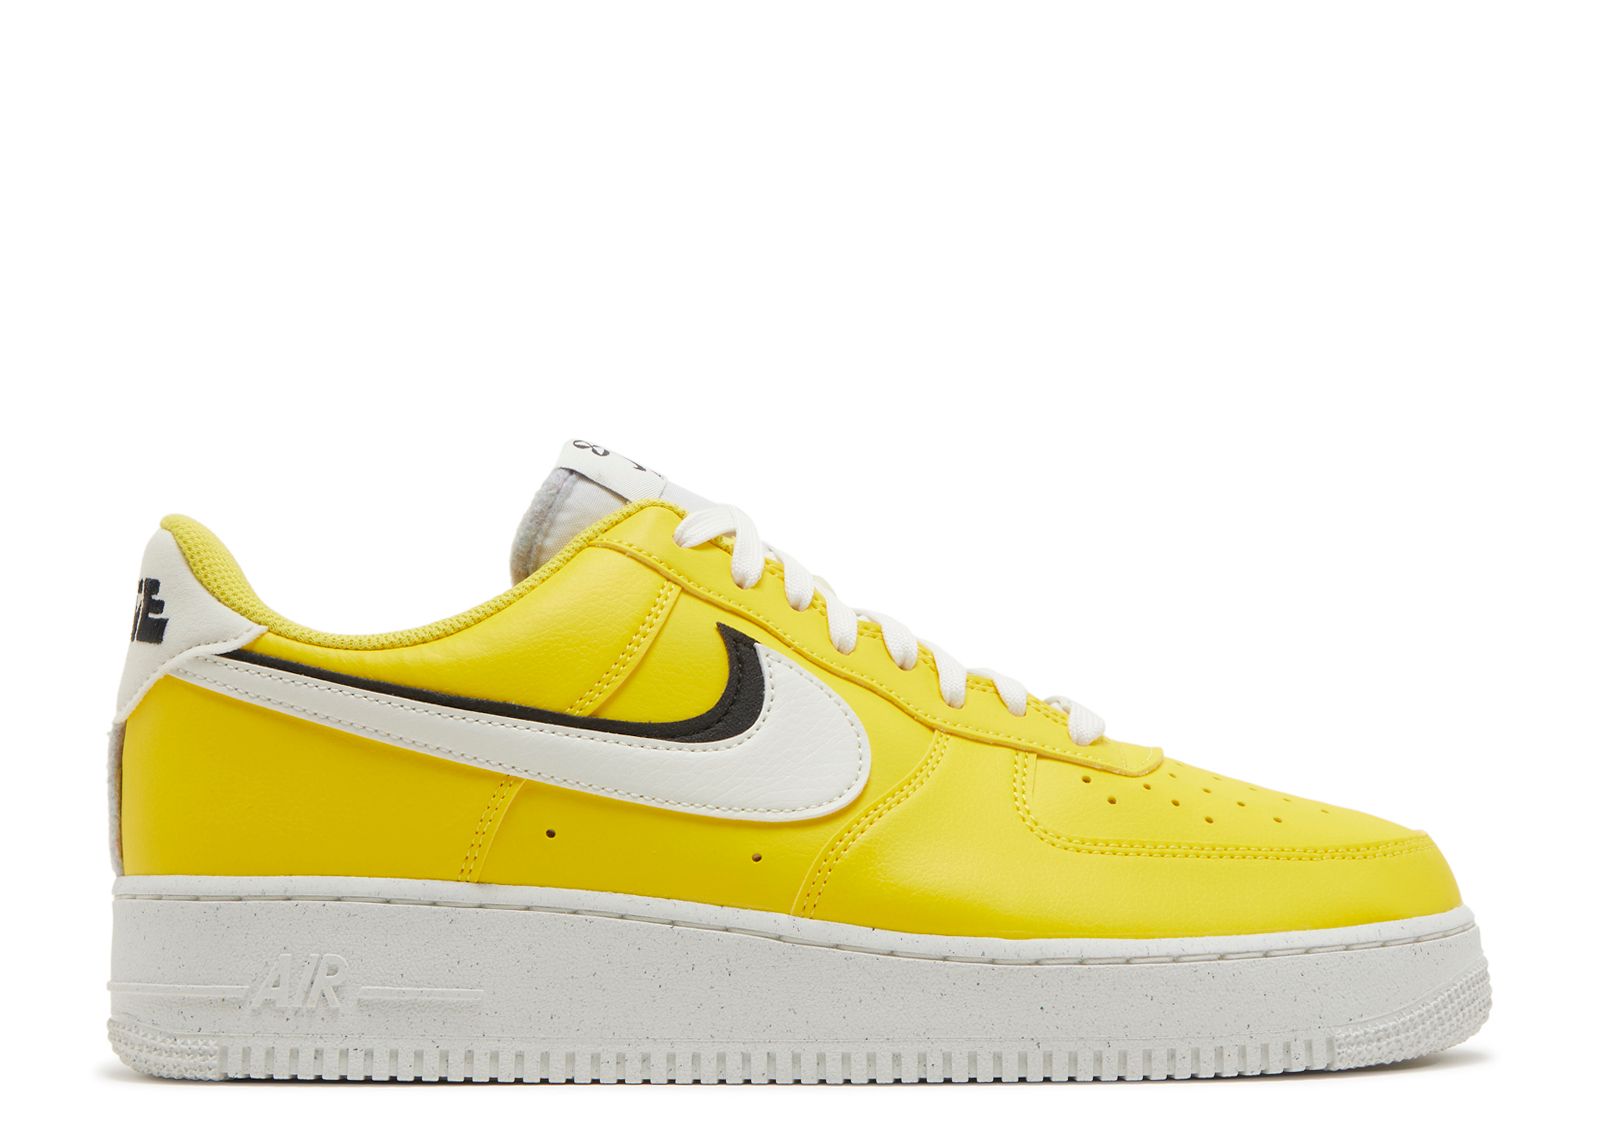 Nike Air Force 1 LV8 Black/White/Tour Yellow, Drops